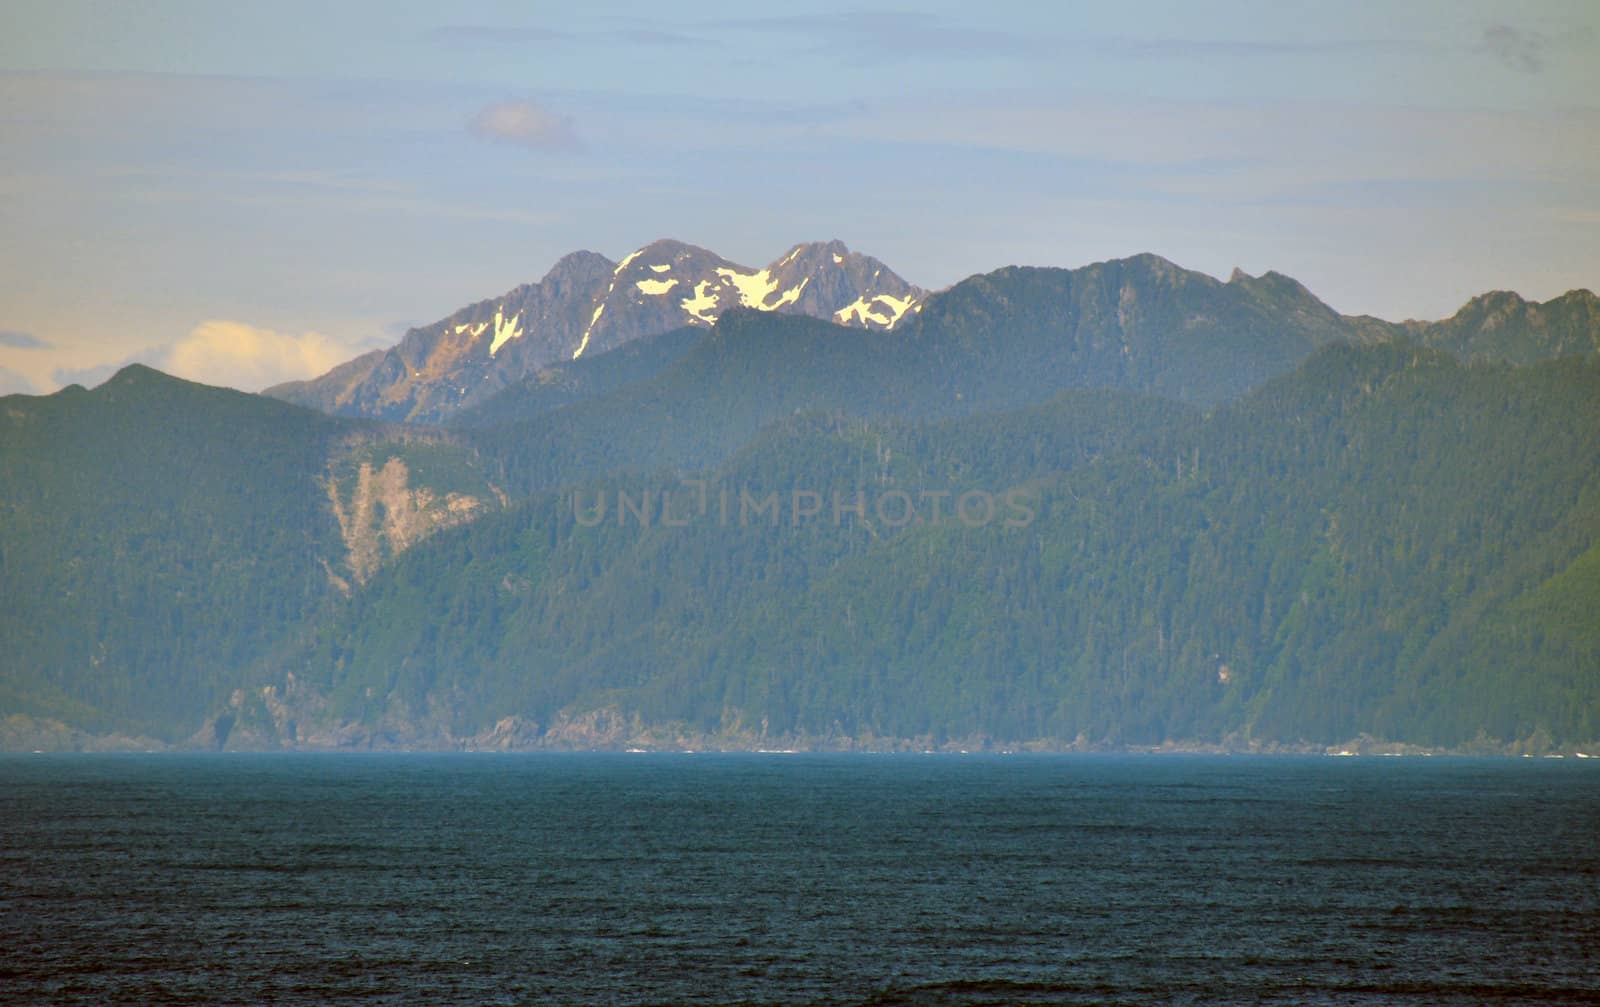 Alaskan mountains and Ocean by RefocusPhoto